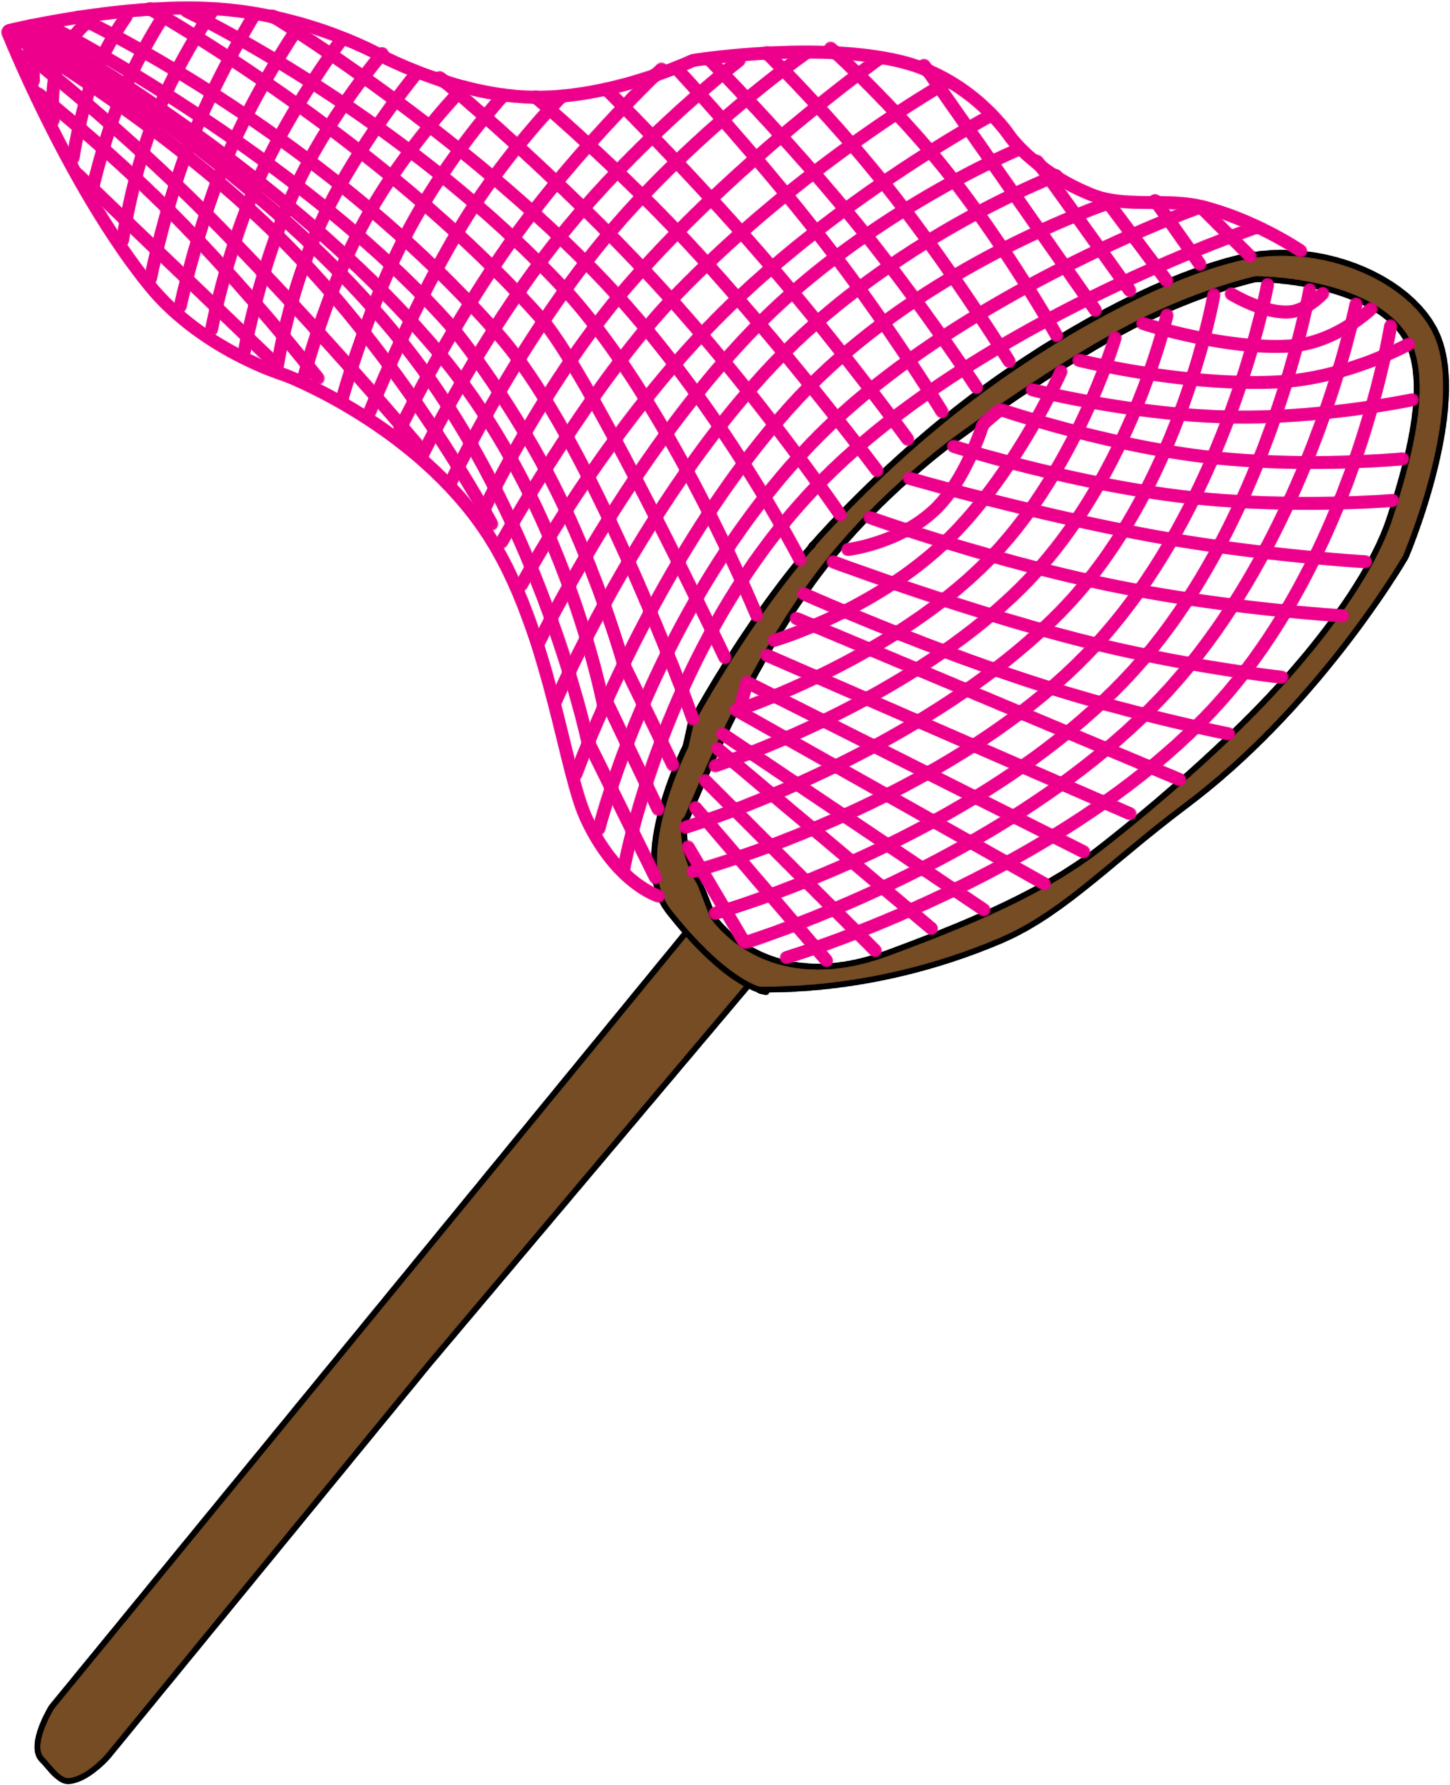 A Pink Net On A Stick